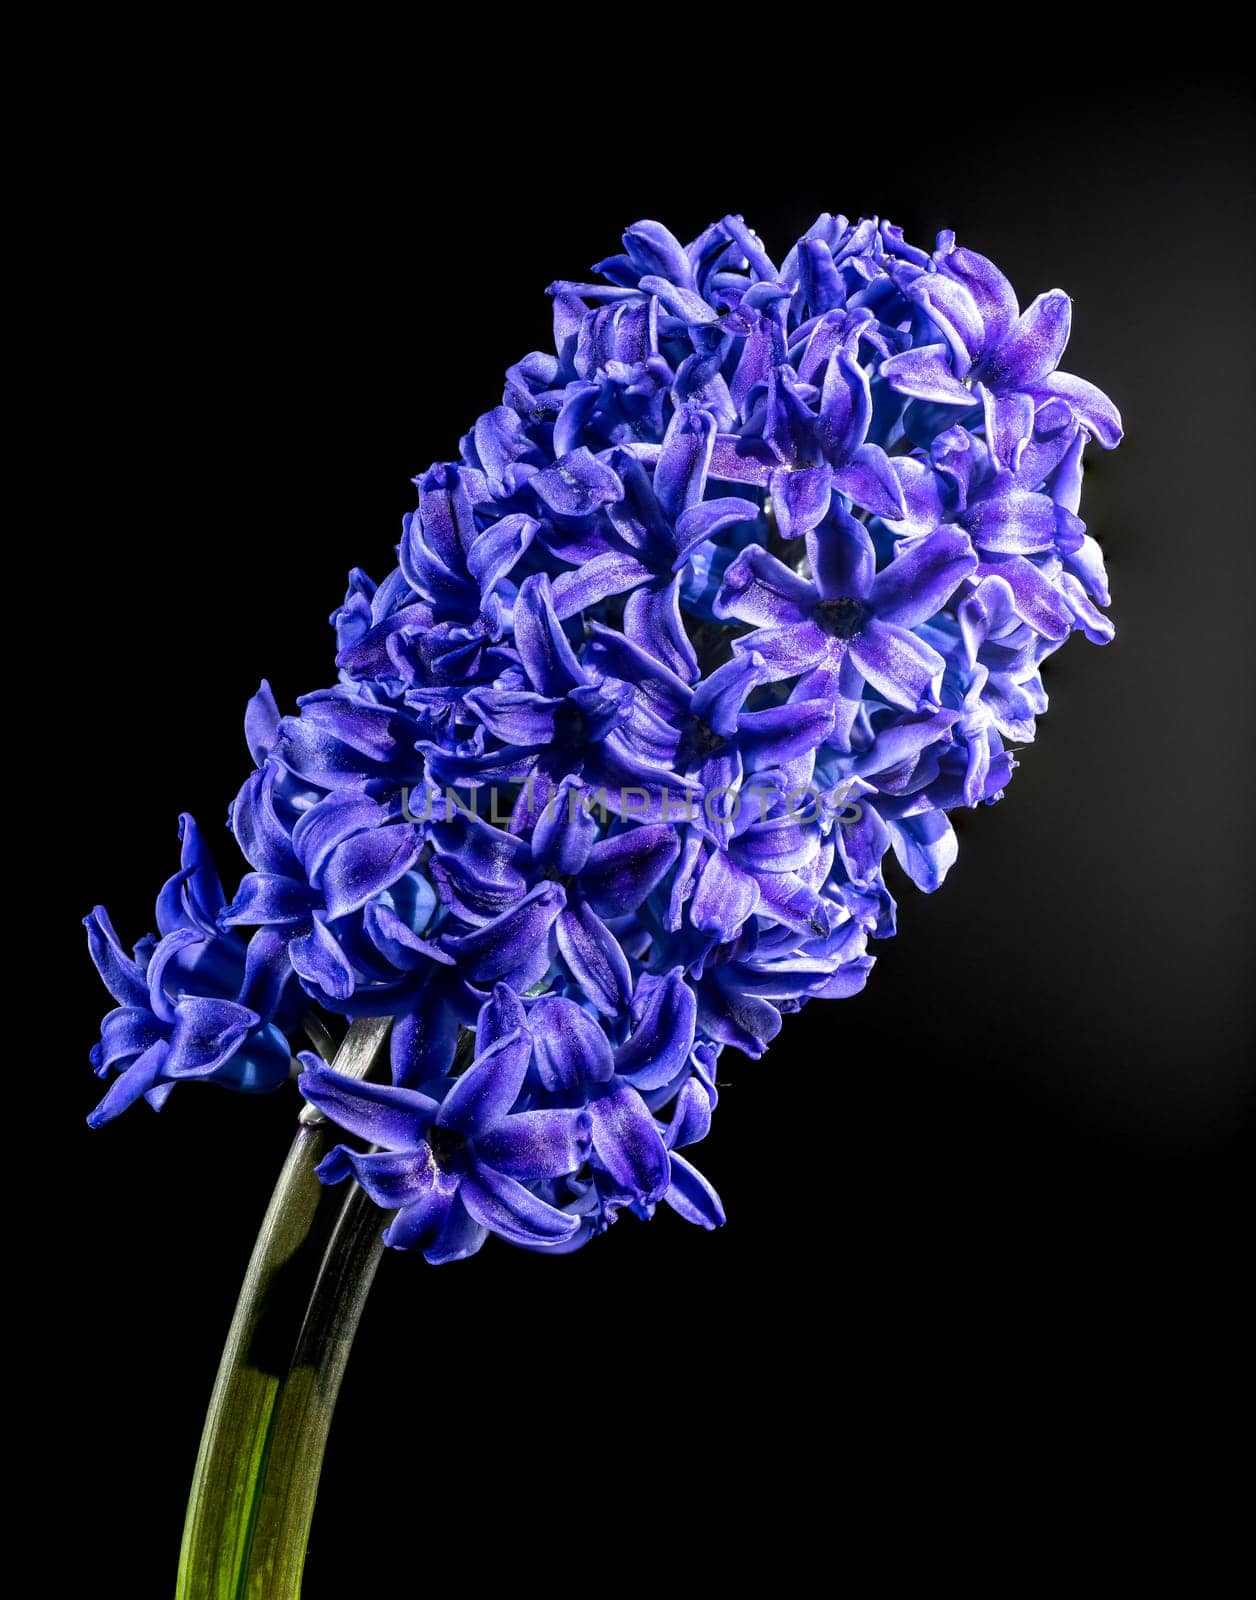 Purple Hyacinth flower on a black background by Multipedia